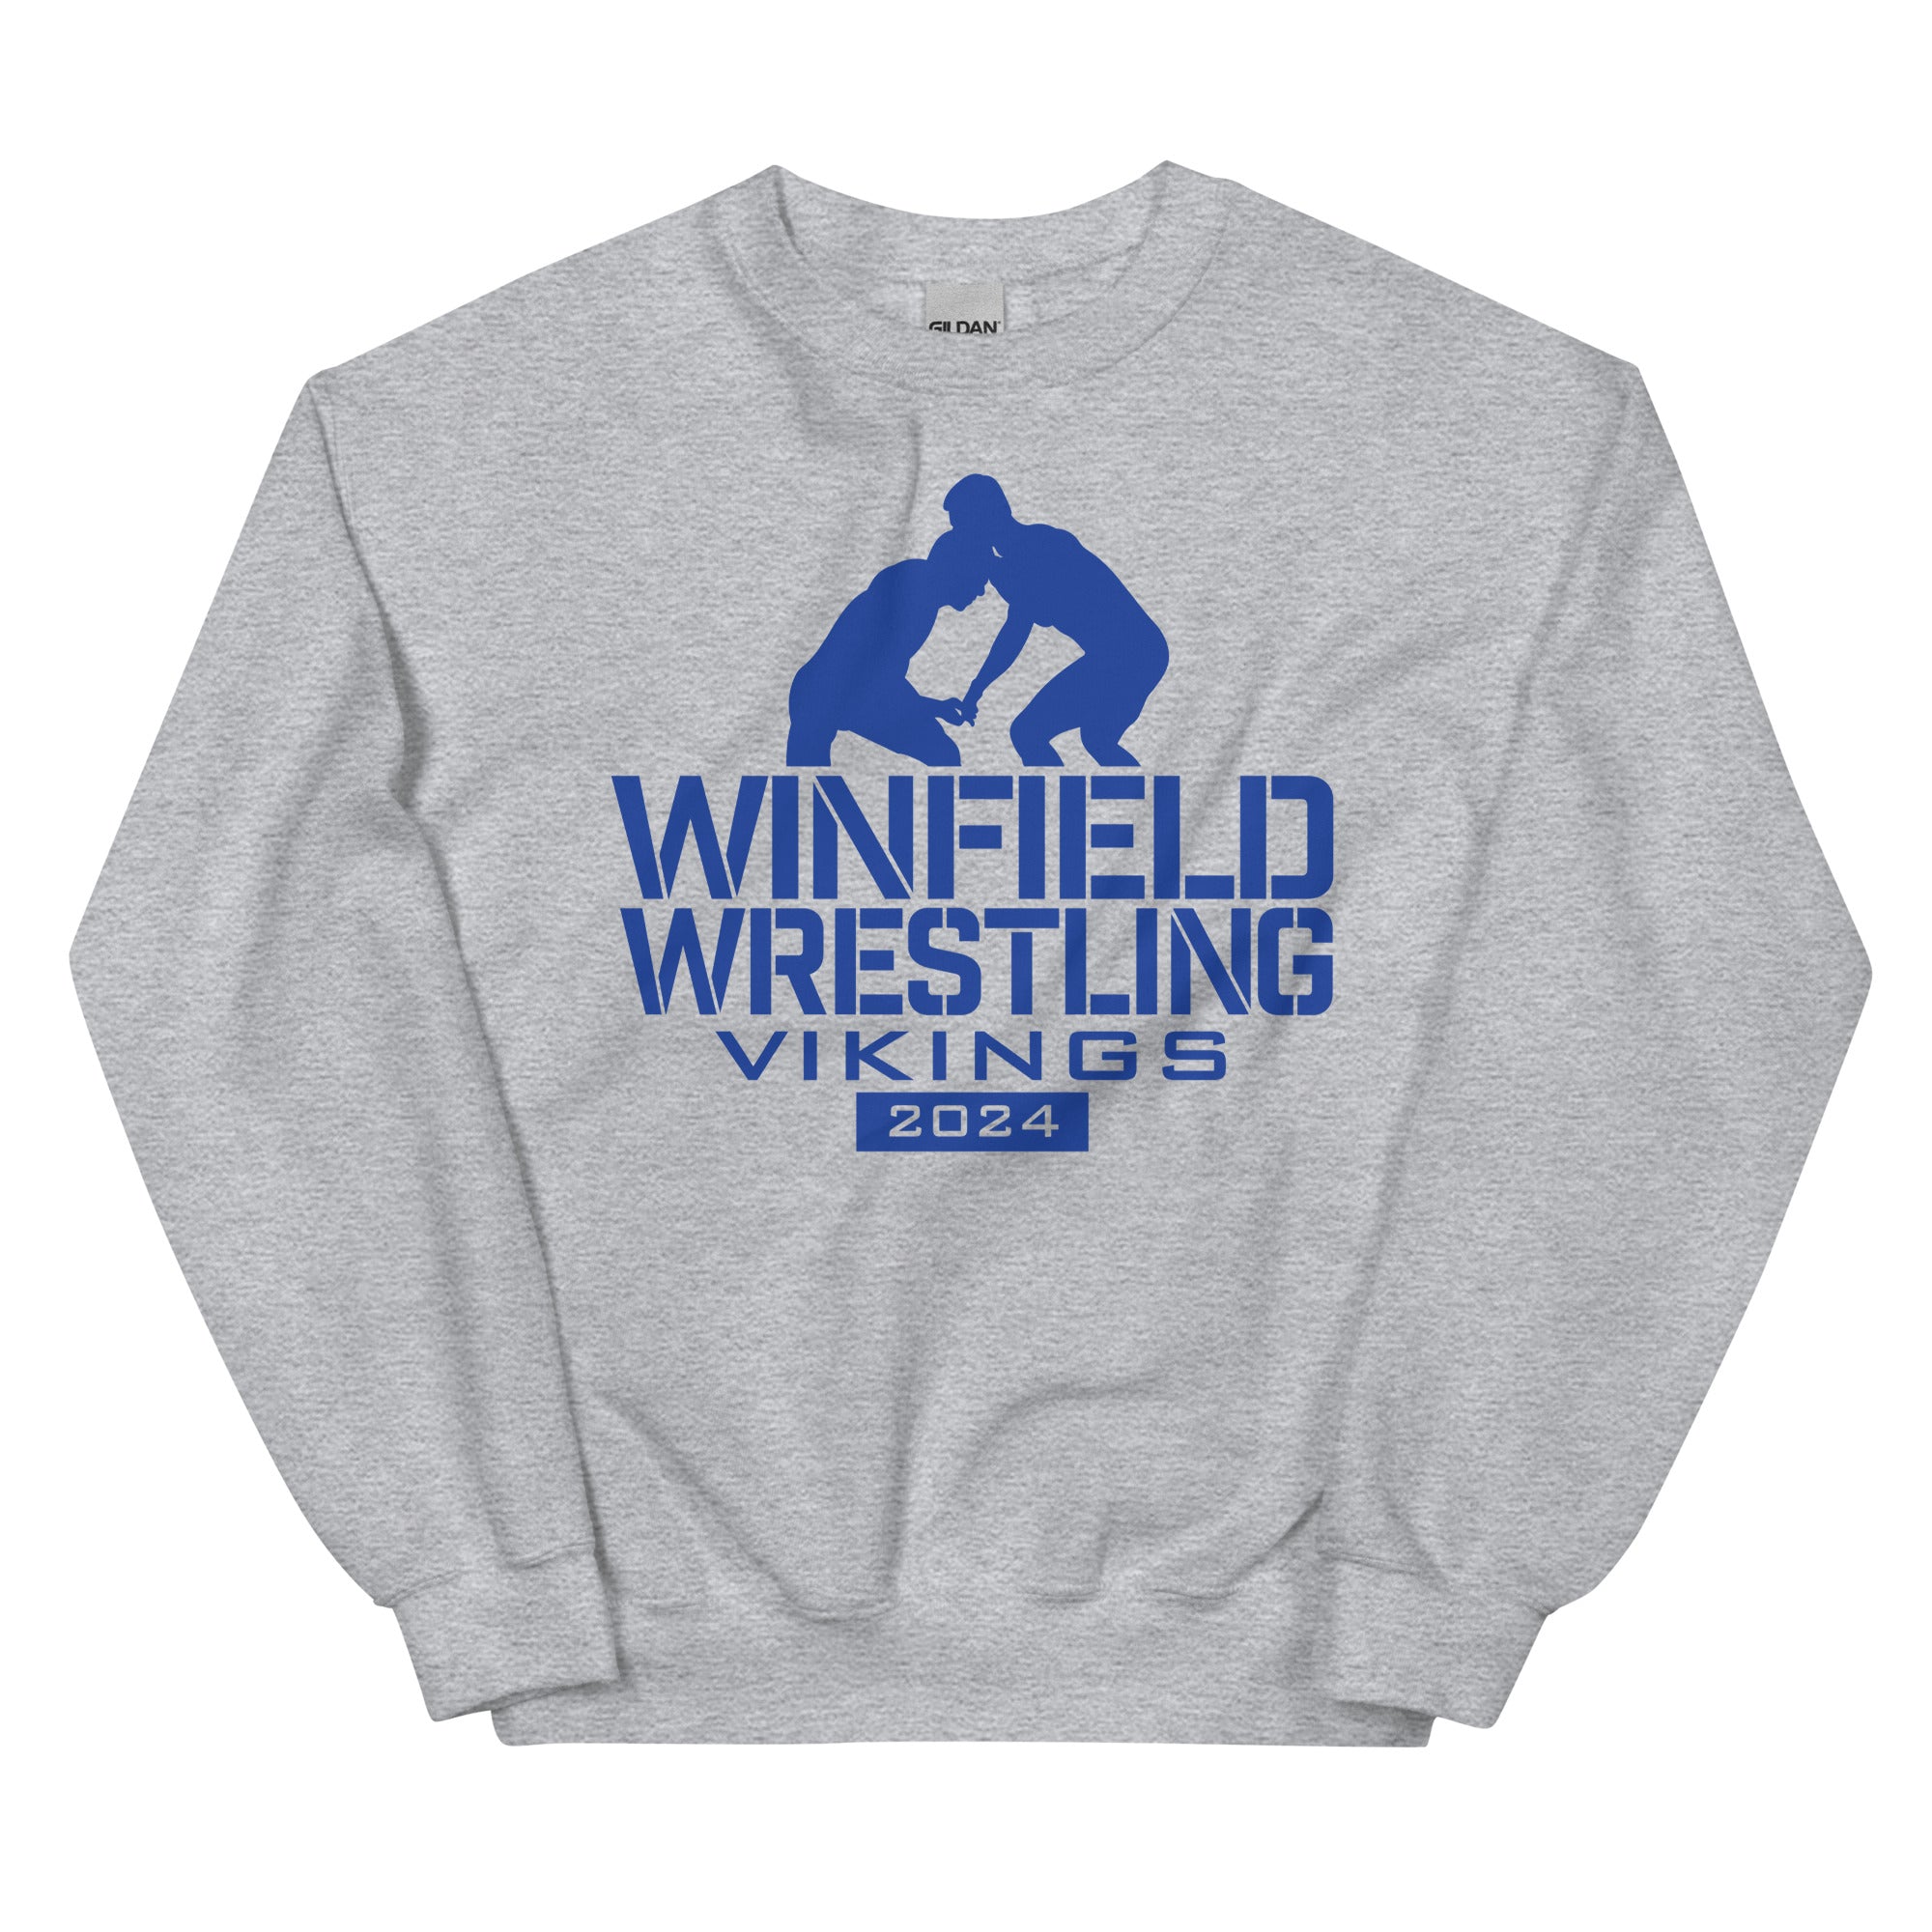 Winfield Wrestling Vikings 2024 Unisex Sweatshirt